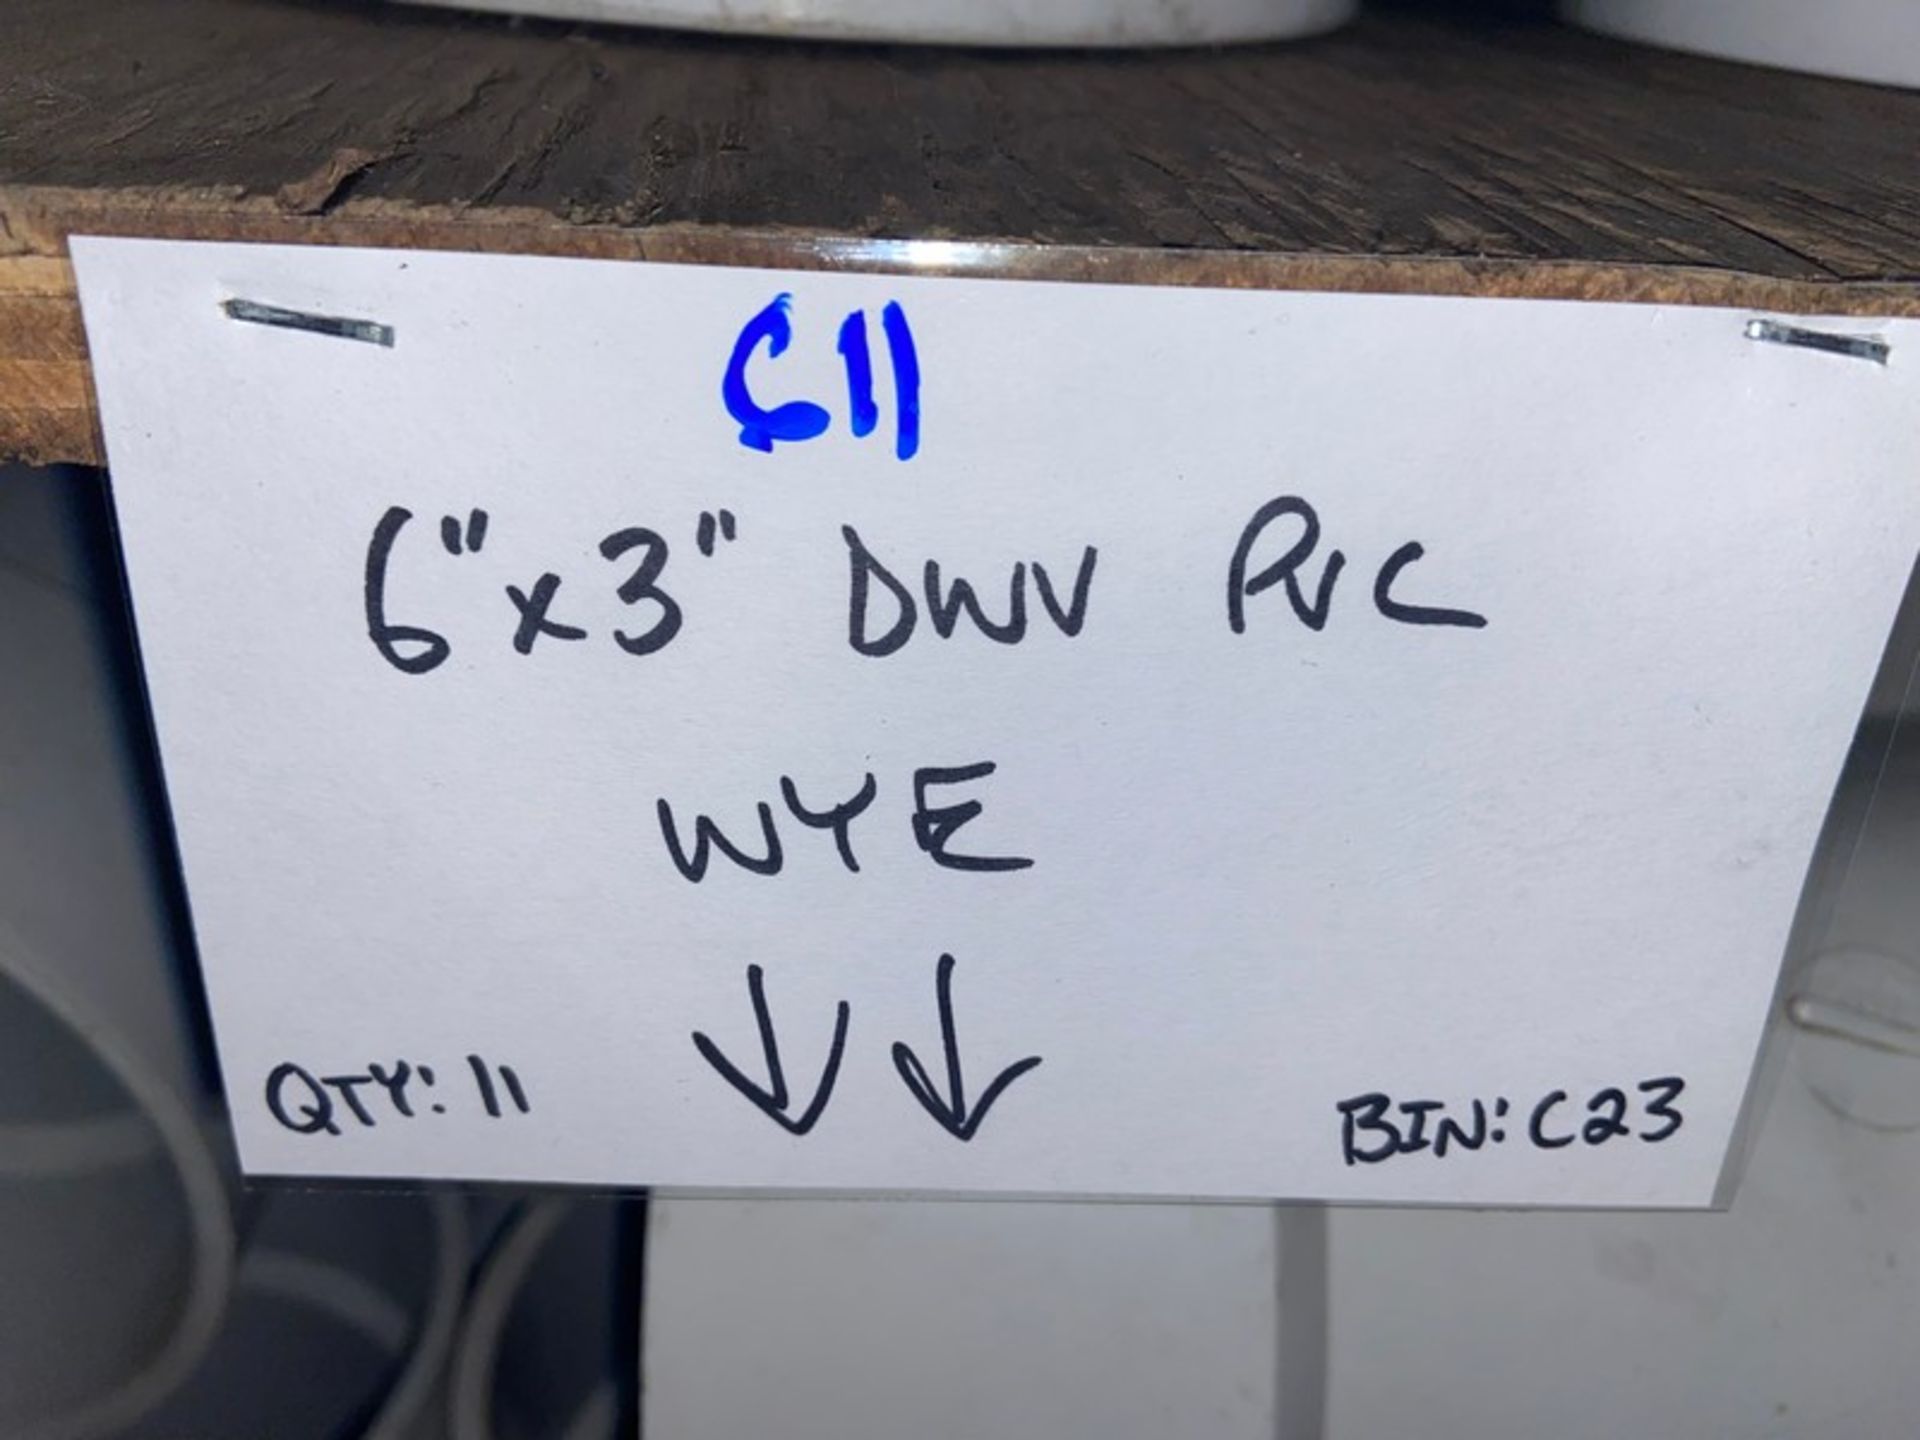 (11) 6”x3” DWV PVC WYE (Bin:C23)(LOCATED IN MONROEVILLE, PA) - Image 3 of 3